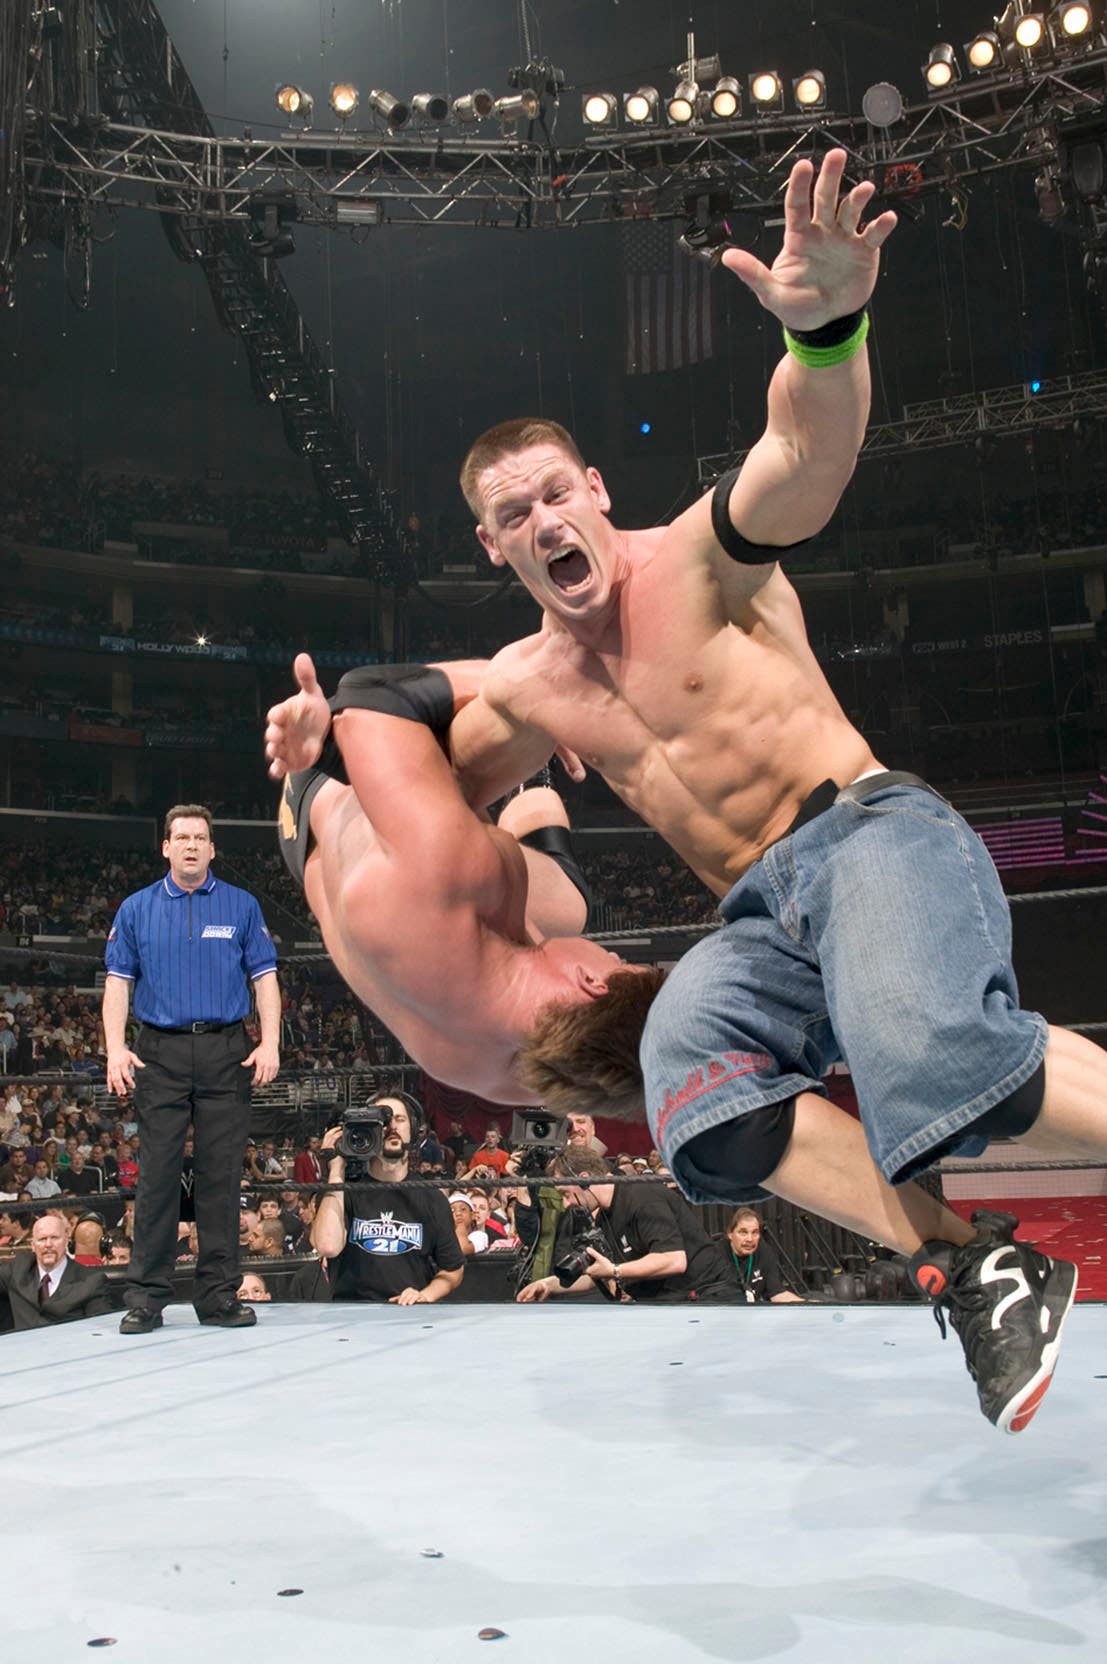 John Cena at WrestleMania 21 in 2005